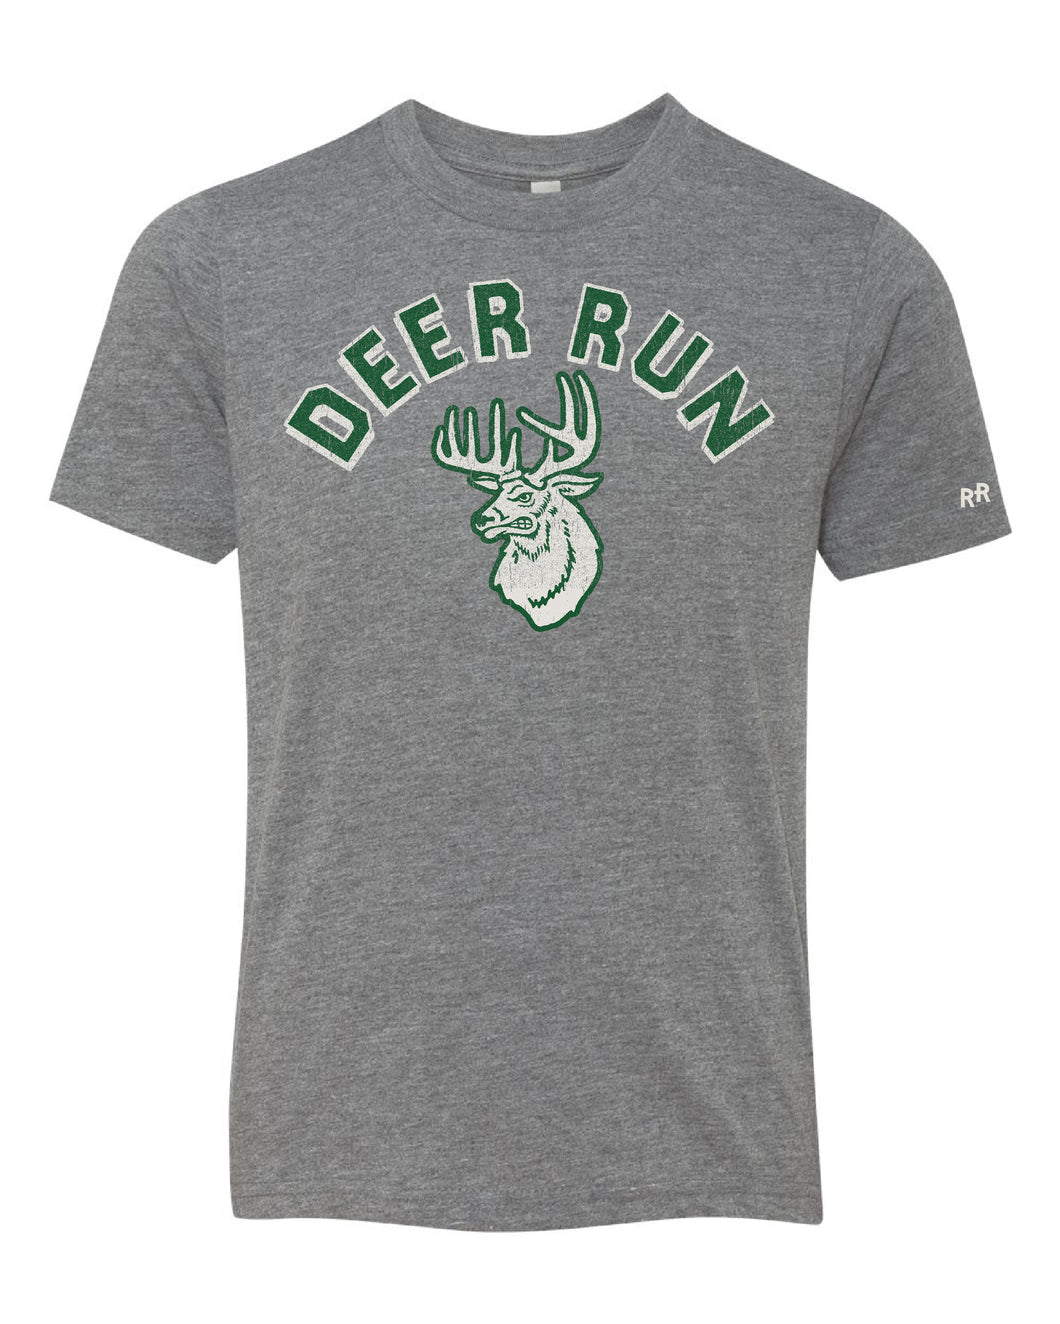 Deer Run Mascot Tee | YOUTH